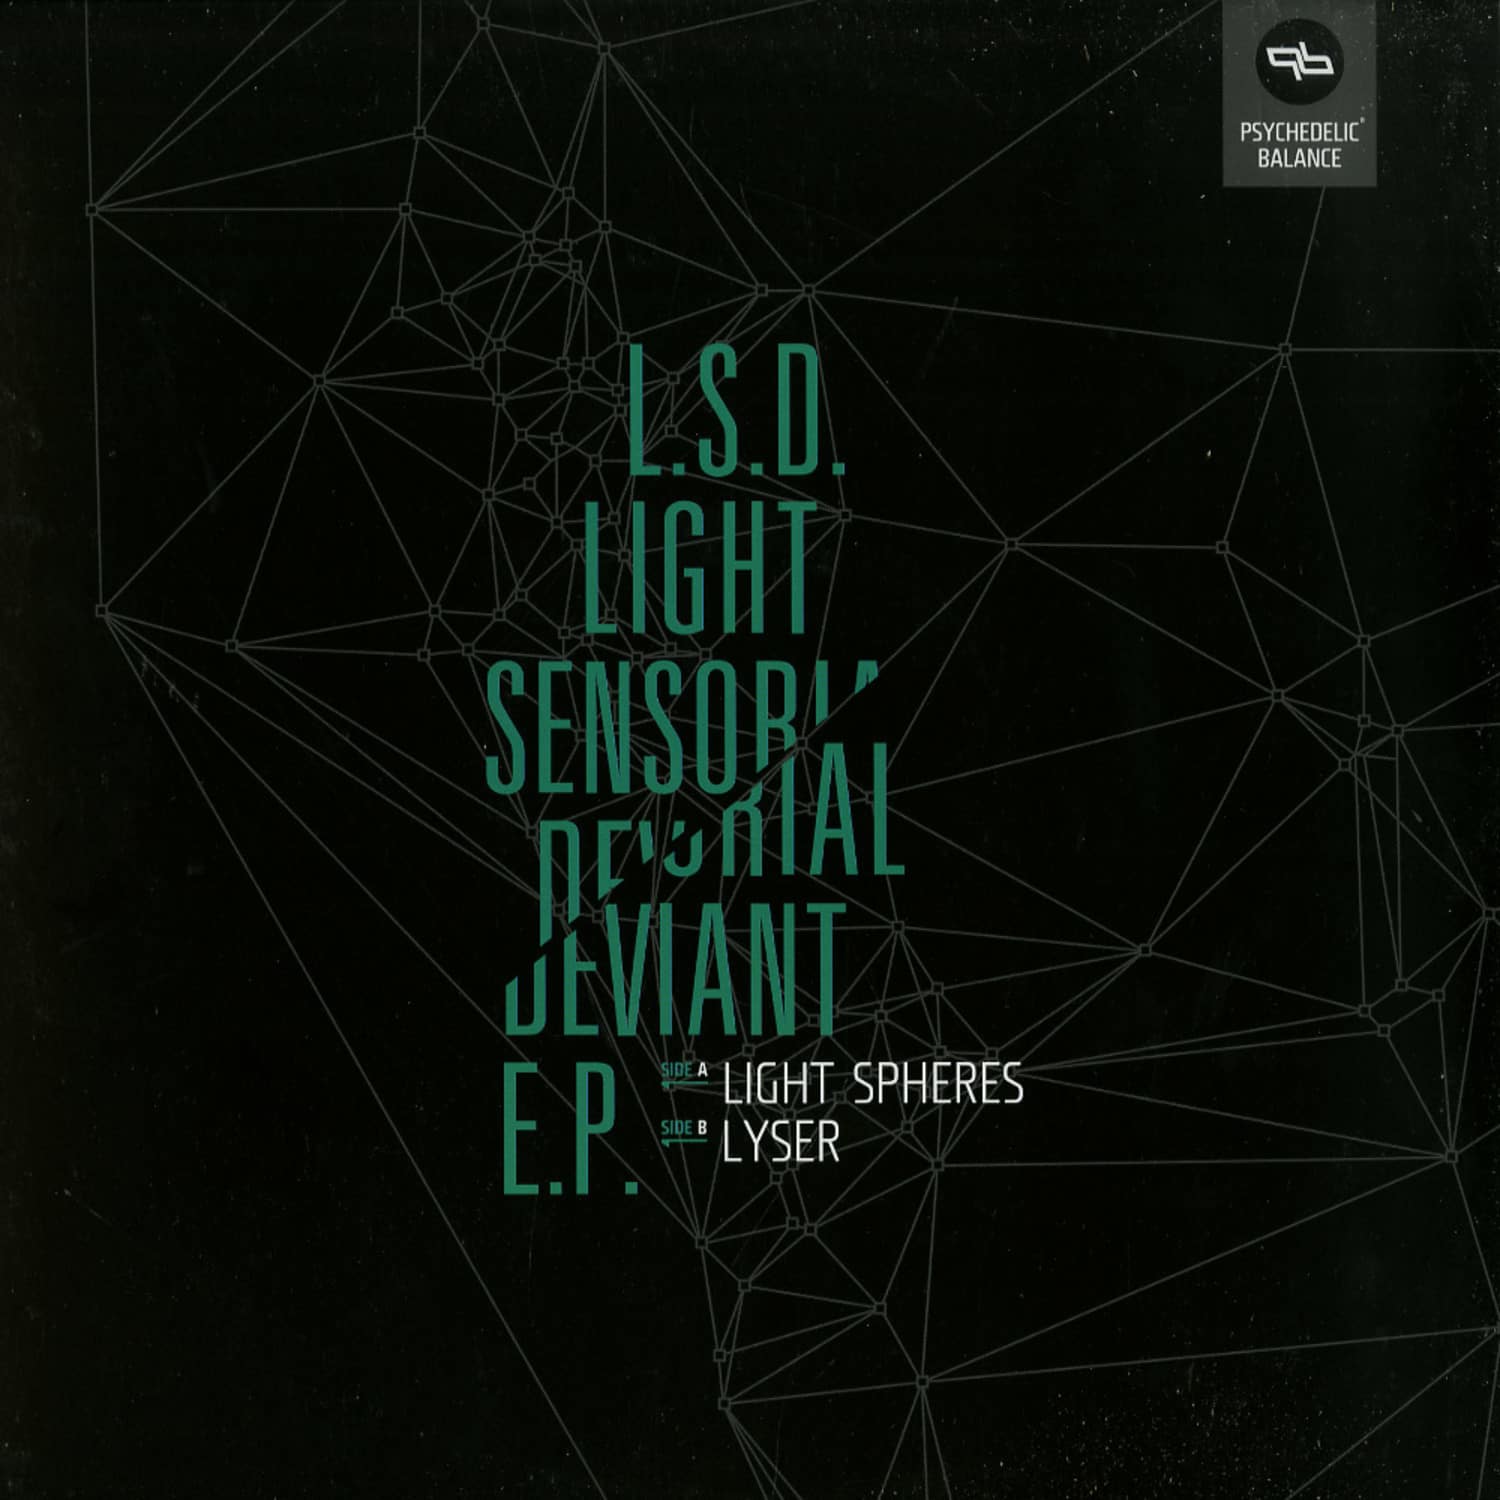 Light Spheres / Lyser - L.S.D. LIGHT SENSORIAL DEVIANT EP